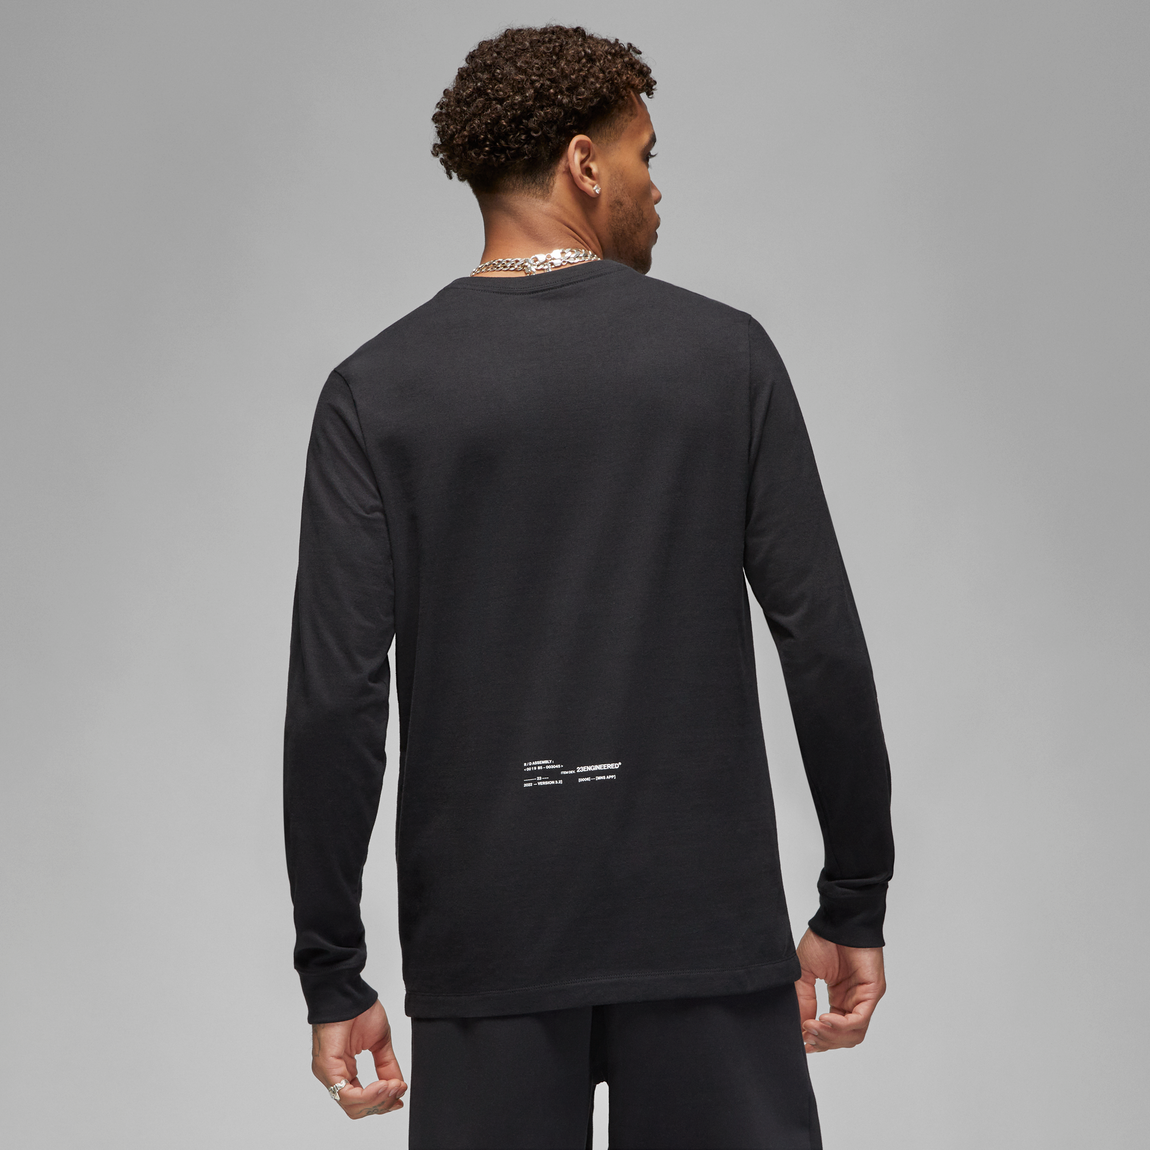 Jordan 23 Engineered Long Sleeve T-Shirt (Black/White) - Jordan 23 Engineered Long Sleeve T-Shirt (Black/White) - 